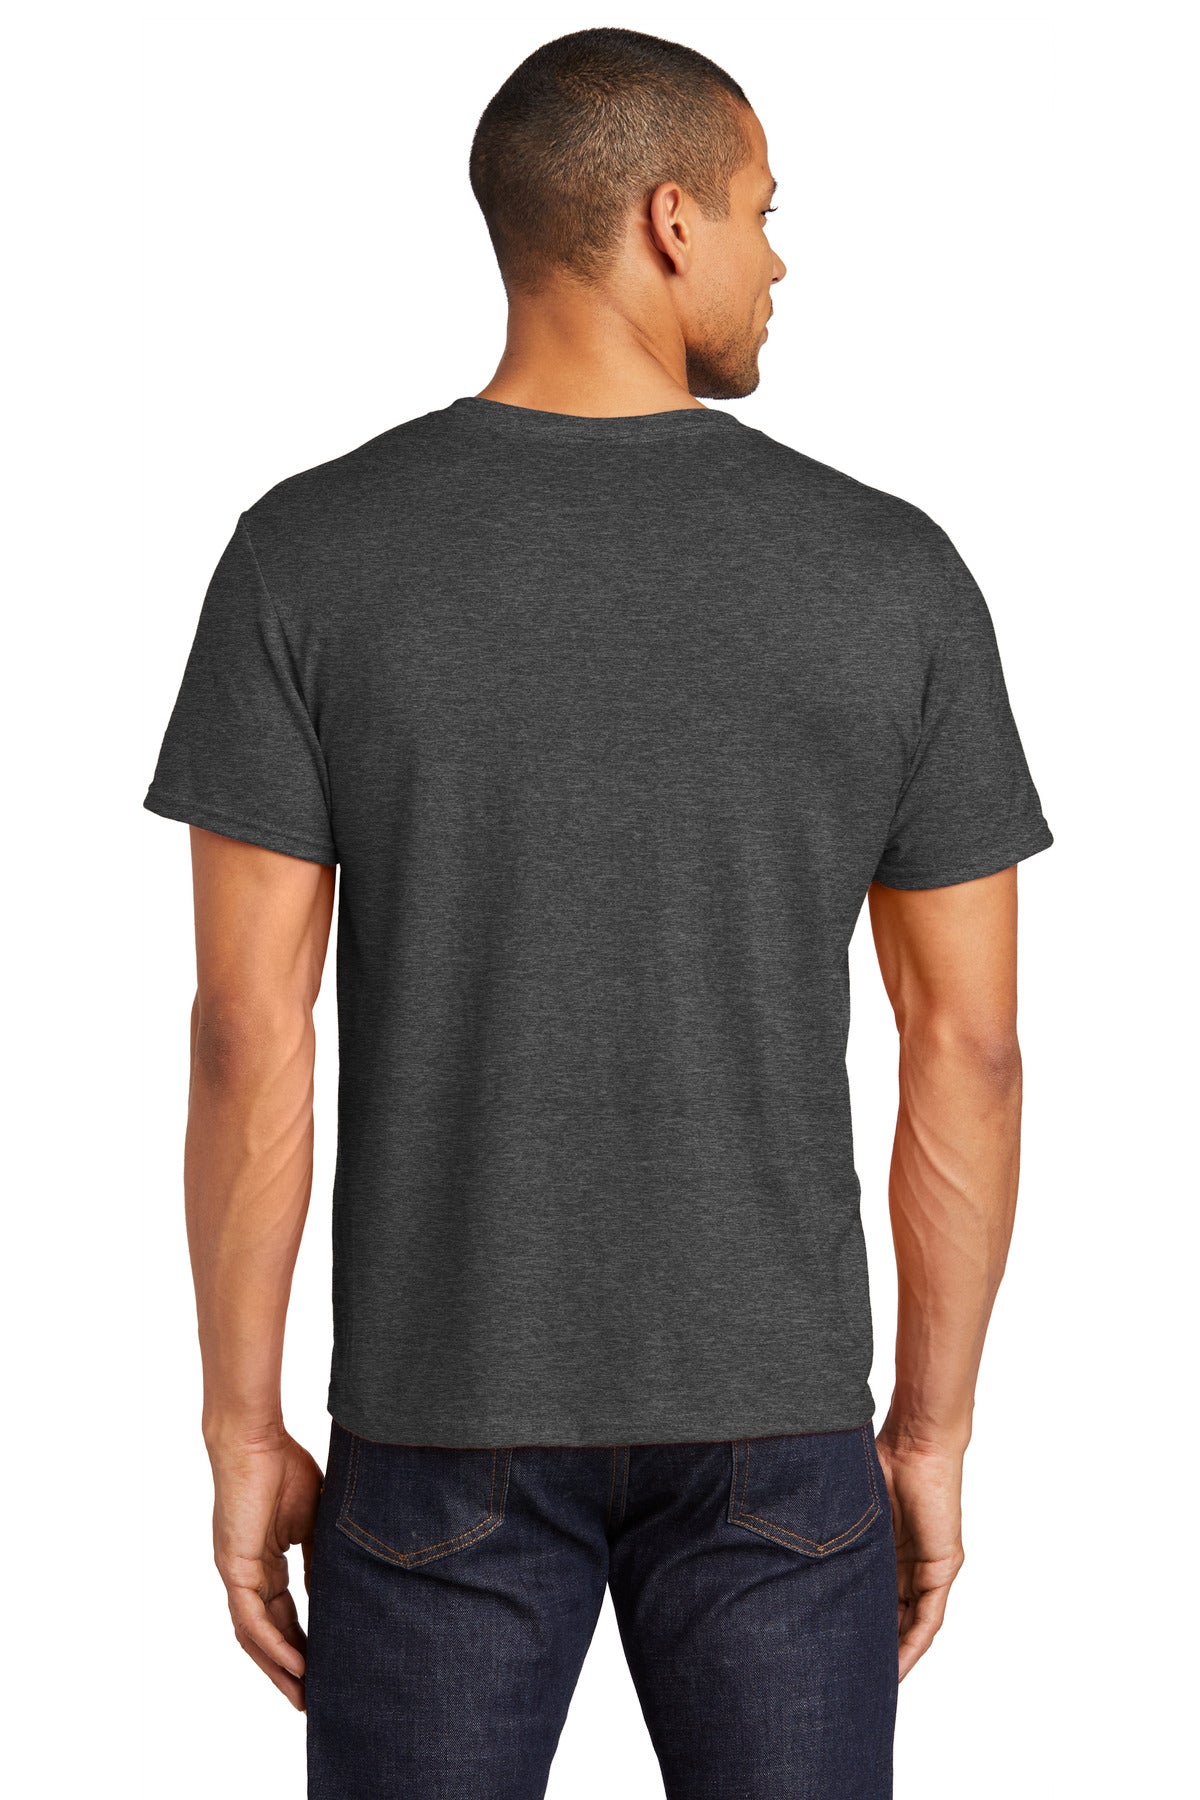 JERZEES® Premium Blend Ring Spun T-Shirt 560M [Charcoal Heather] - DFW Impression